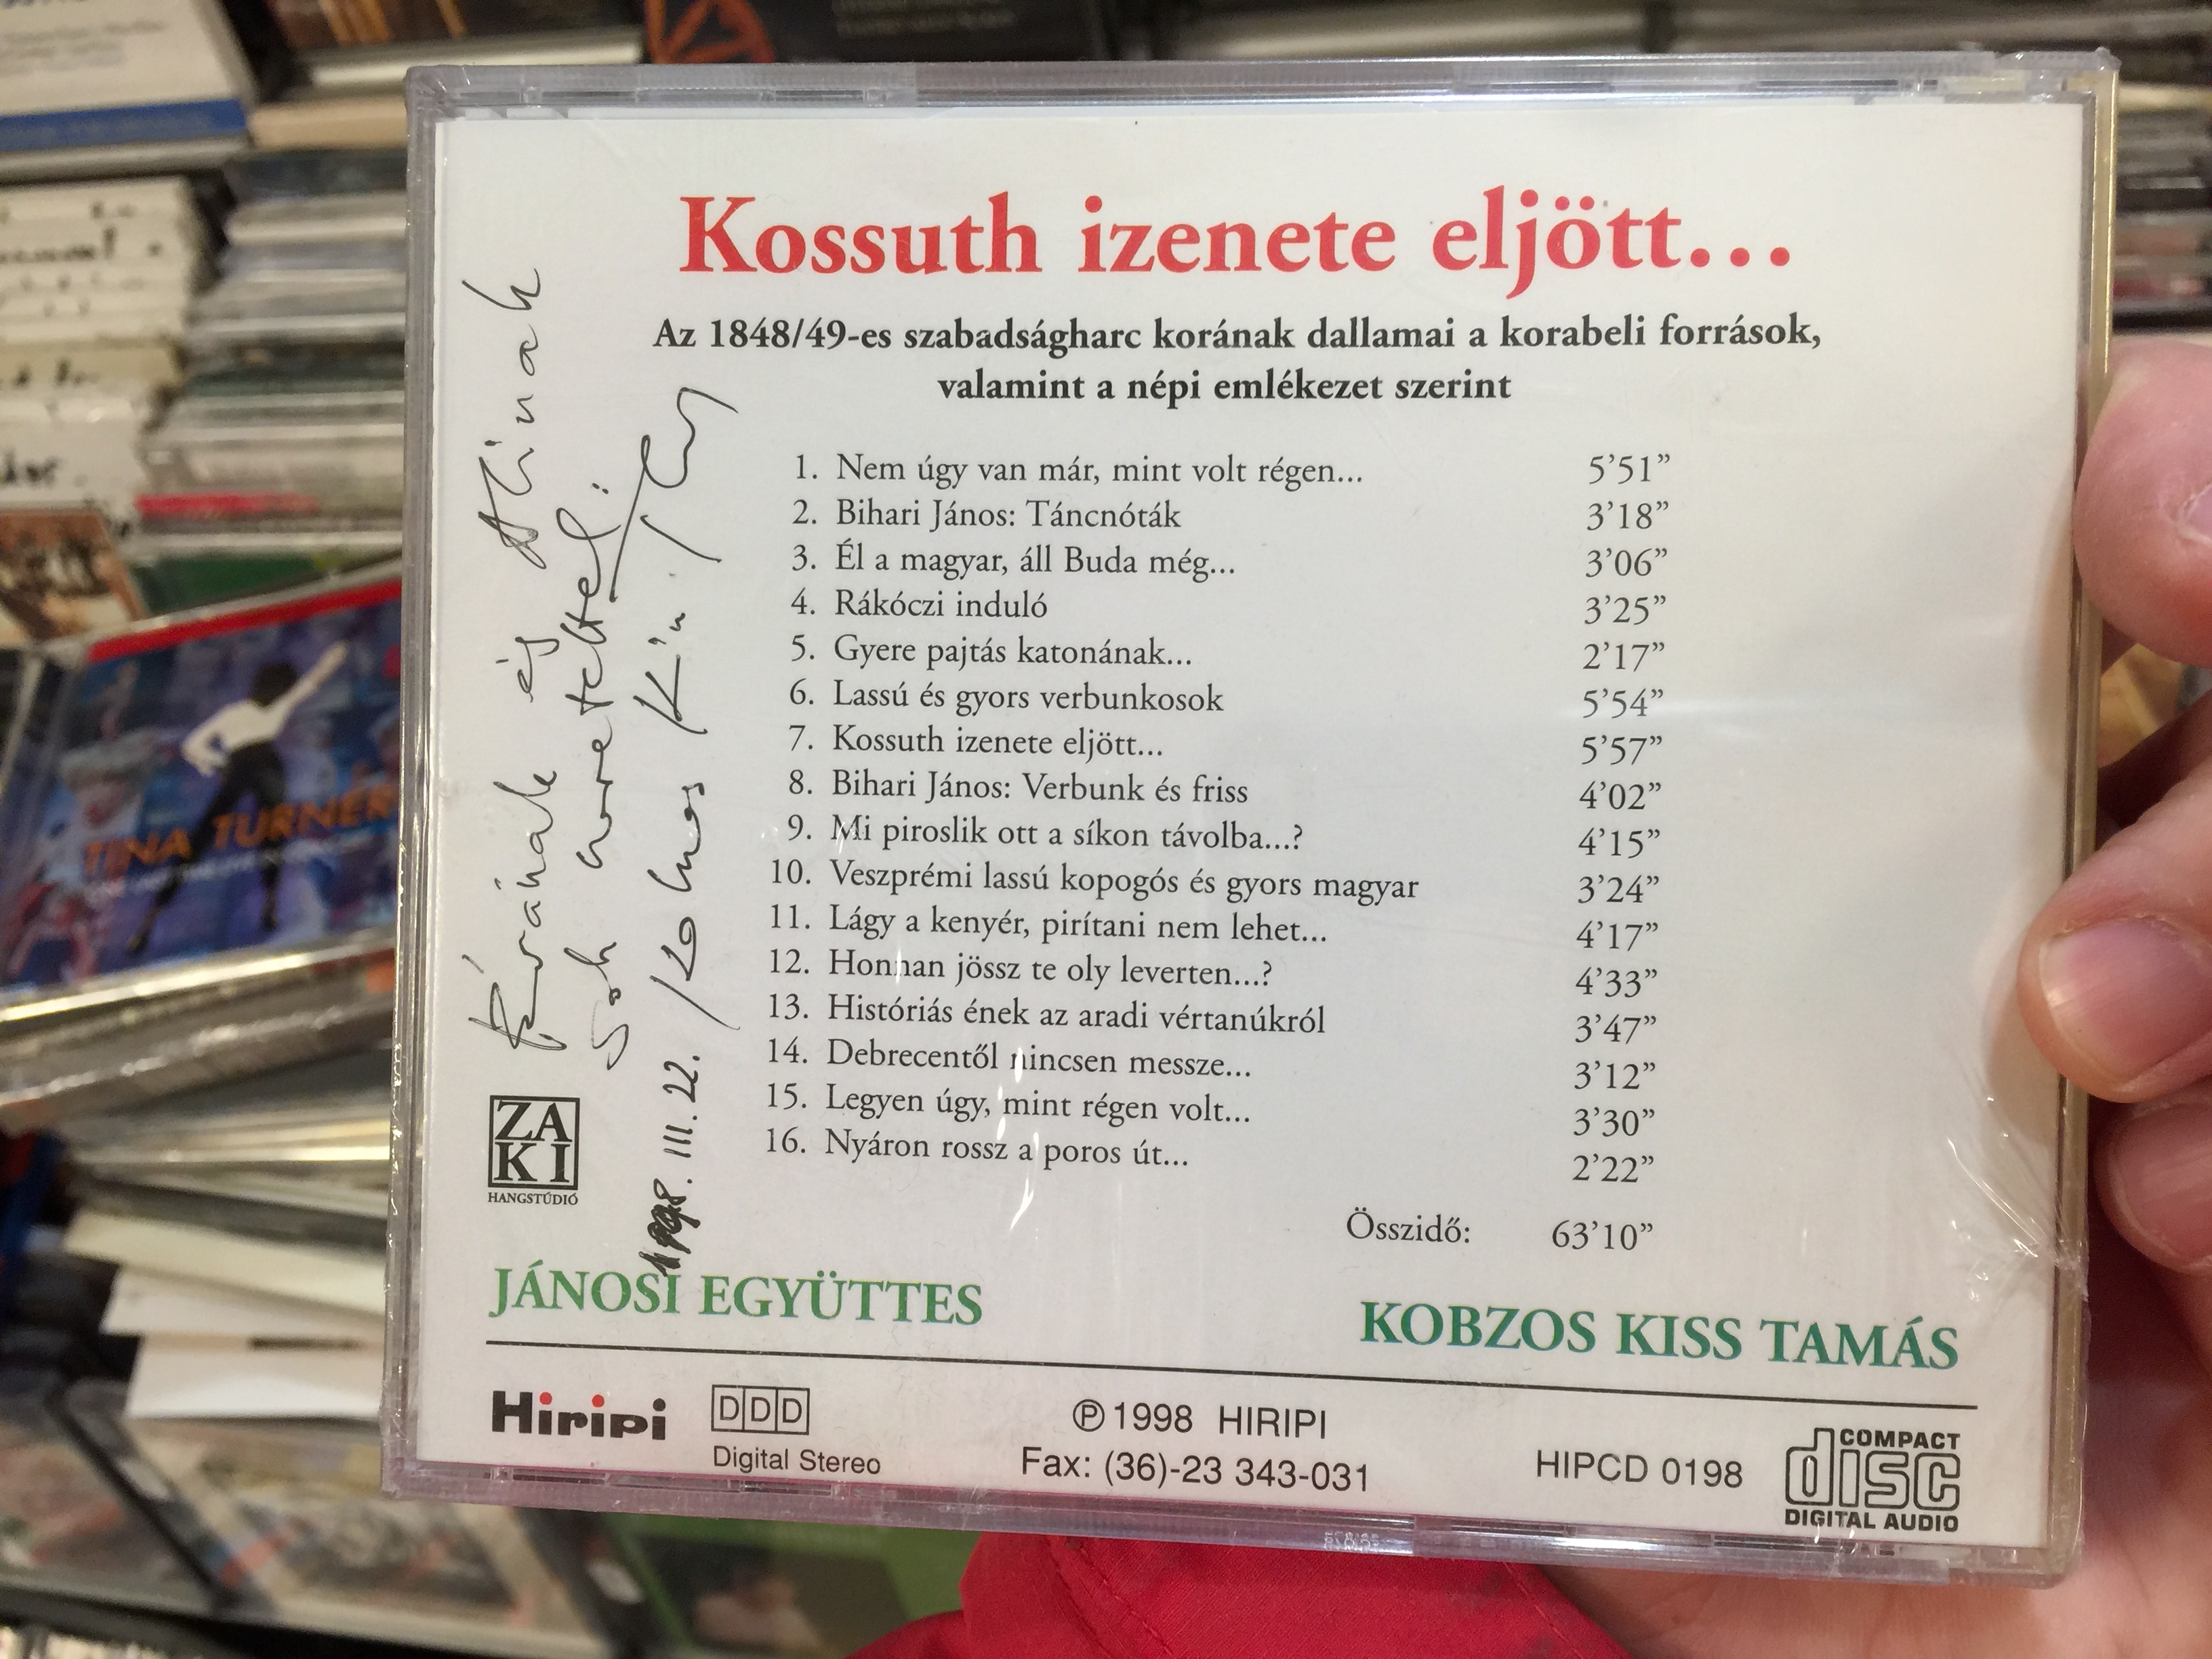 kossuth-izenete-elj-tt-j-nosi-egy-ttes-kobzos-kiss-tam-s-hiripi-audio-cd-1998-stereo-hipcd-0198-2-.jpg